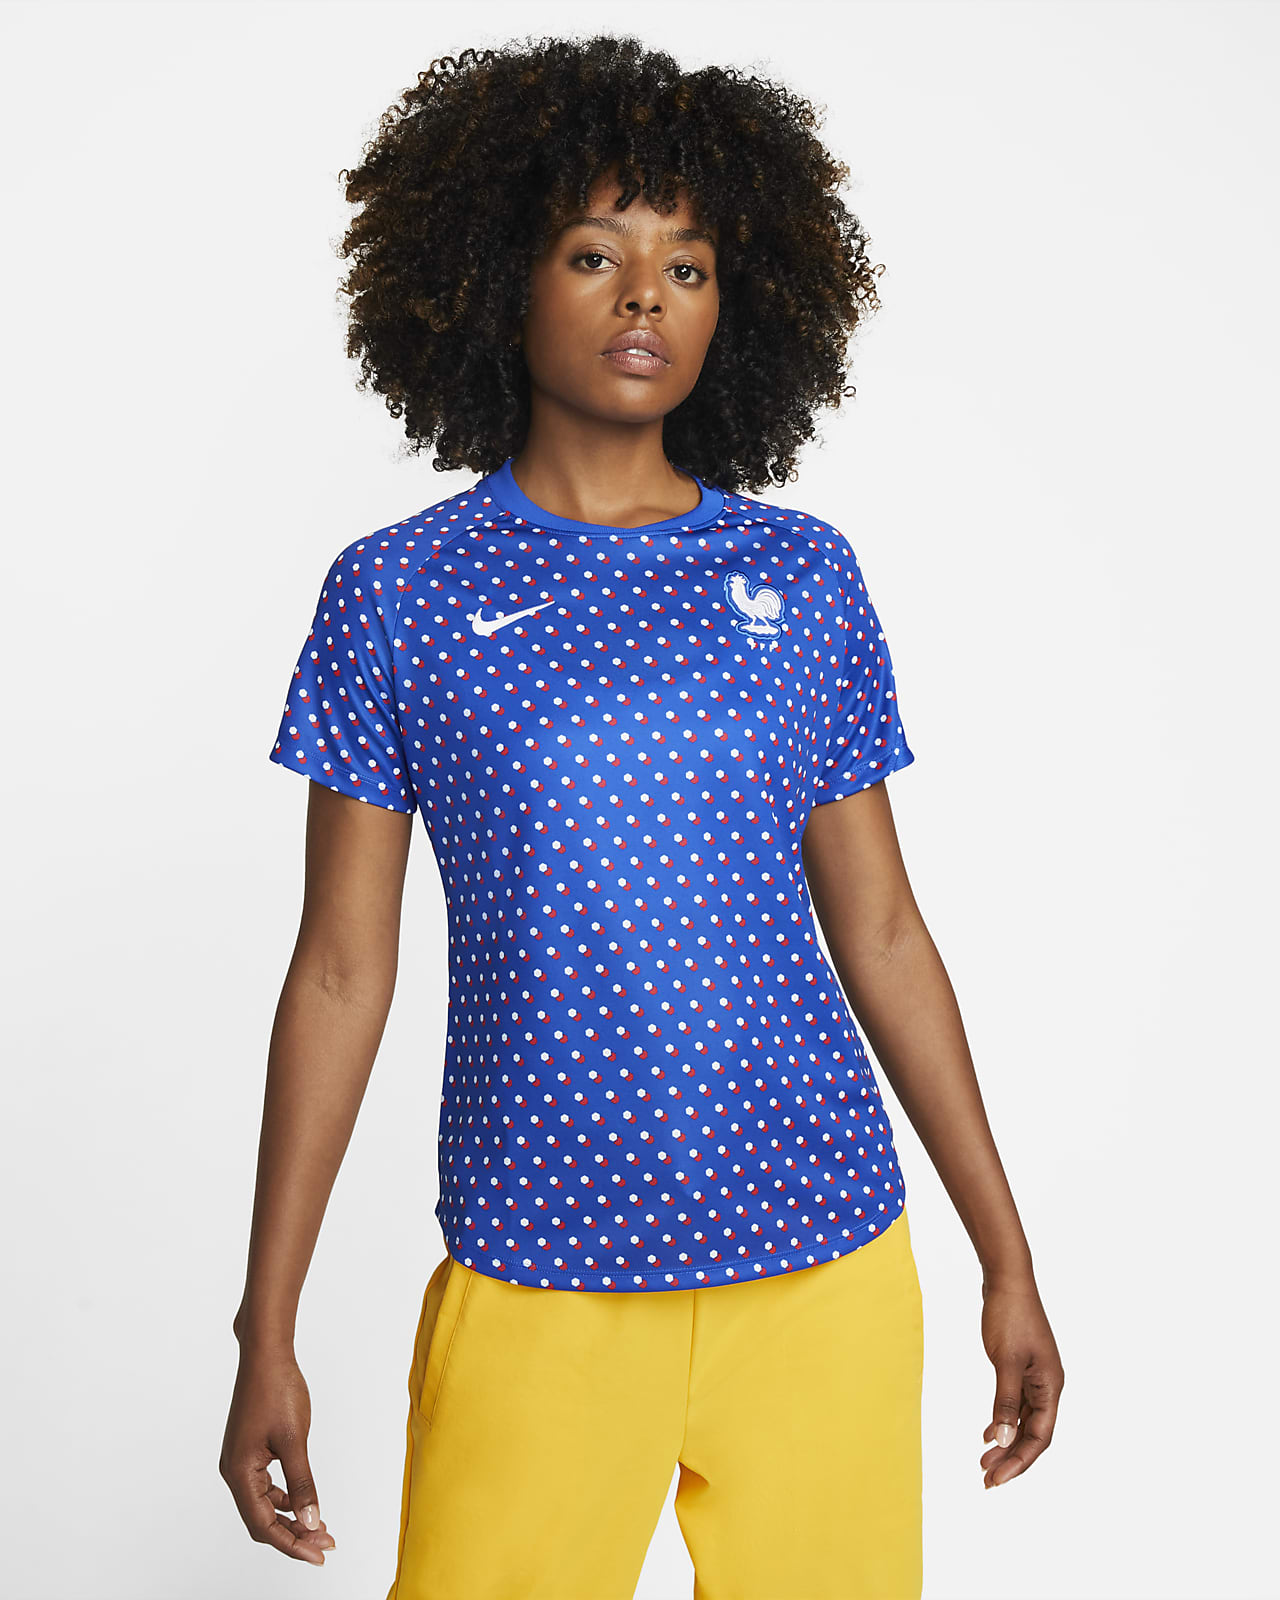 FFF Women's Nike Pre-Match Soccer Top